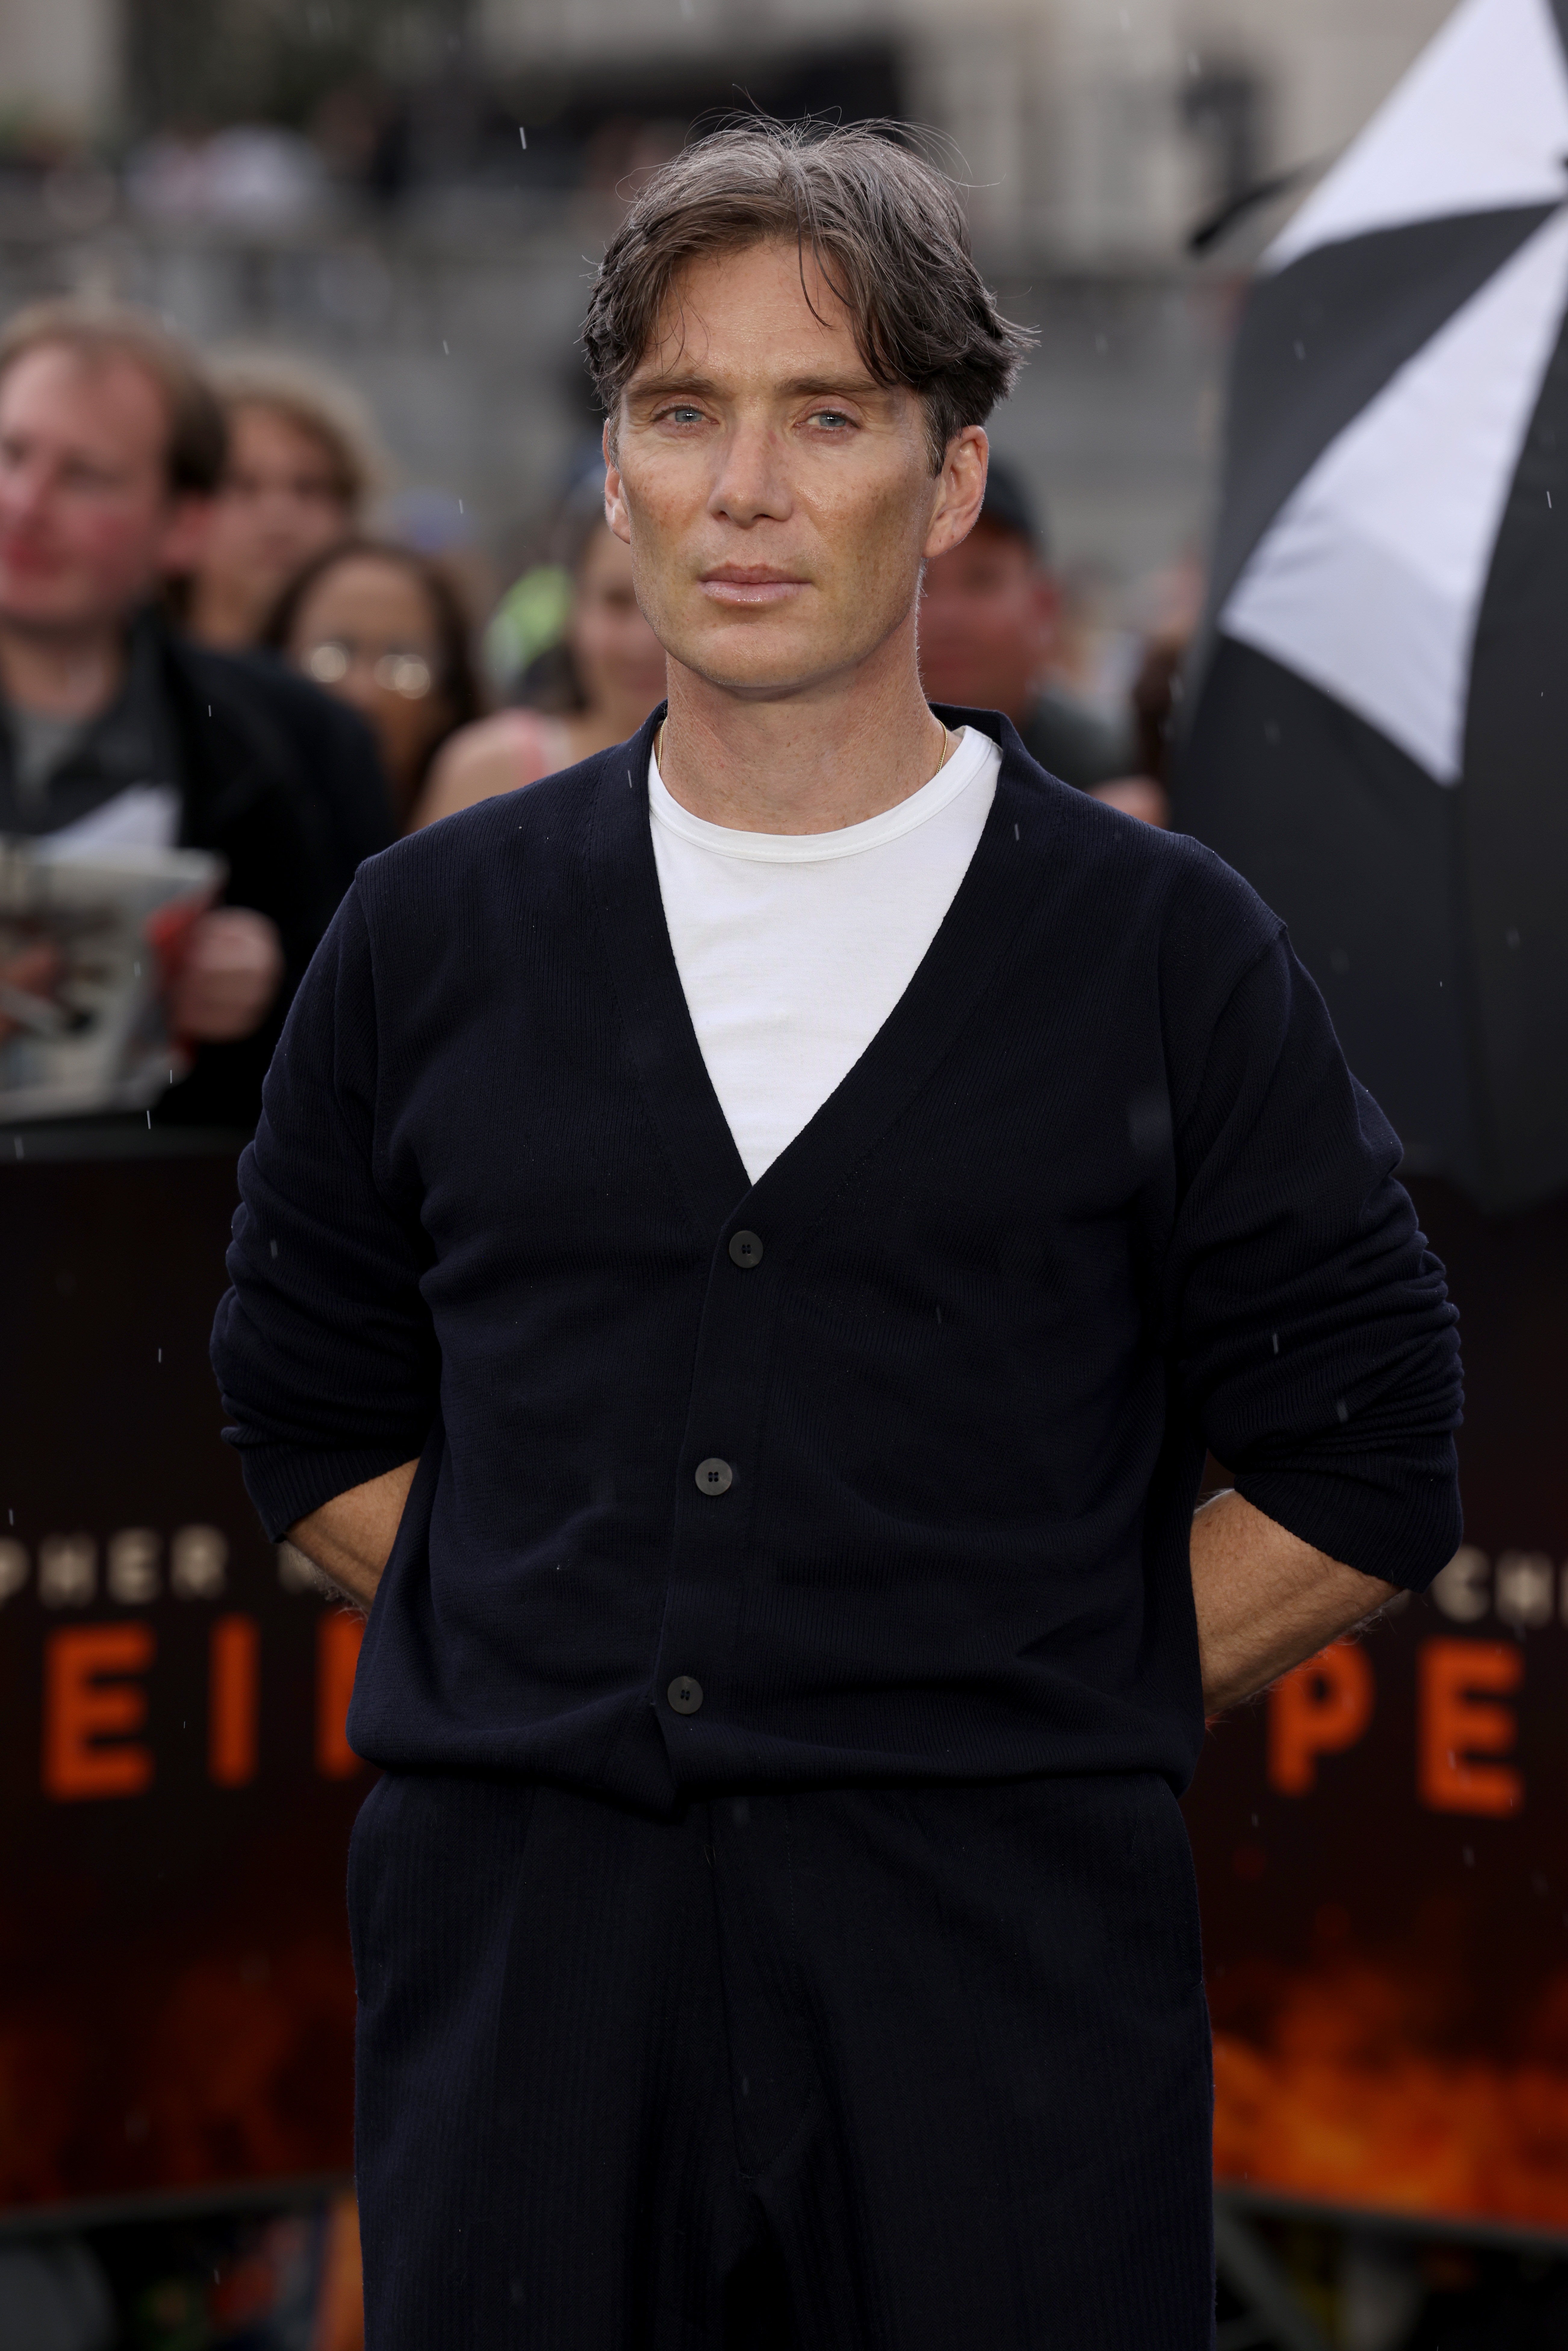 Cillian Murphy besucht den Londoner Photocall für Universal Pictures' "Oppenheimer" am Trafalgar Square in London, England, am 12. Juli 2023. | Quelle: Getty Images